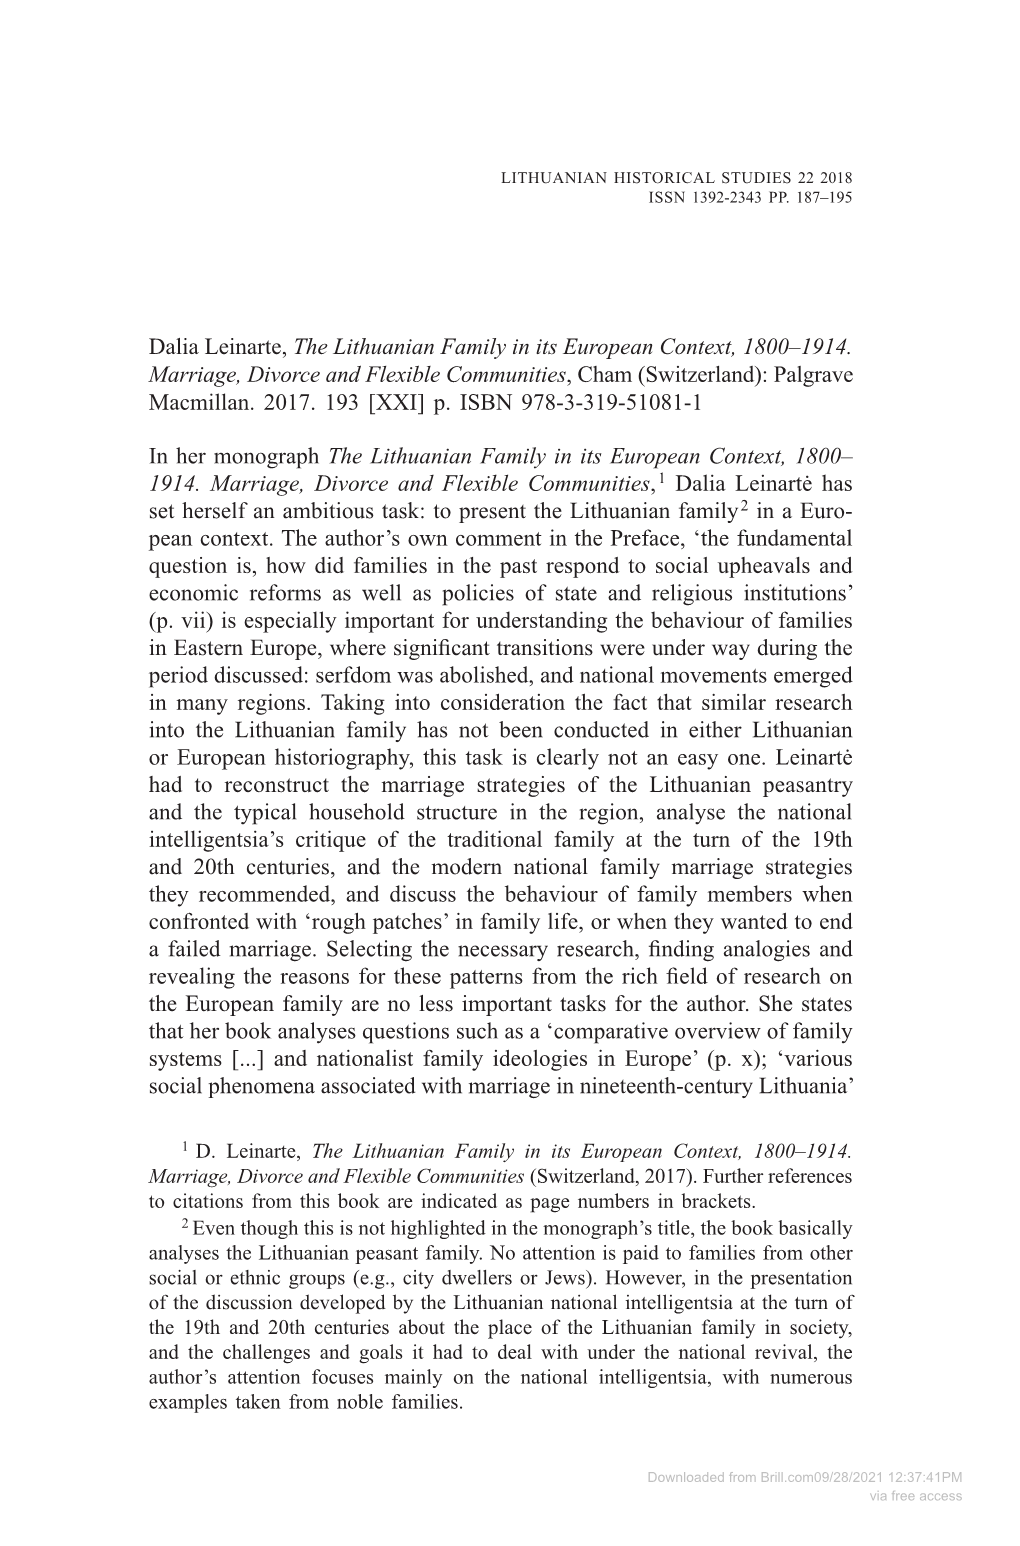 Dalia Leinarte, the Lithuanian Family in Its European Context, 1800–1914